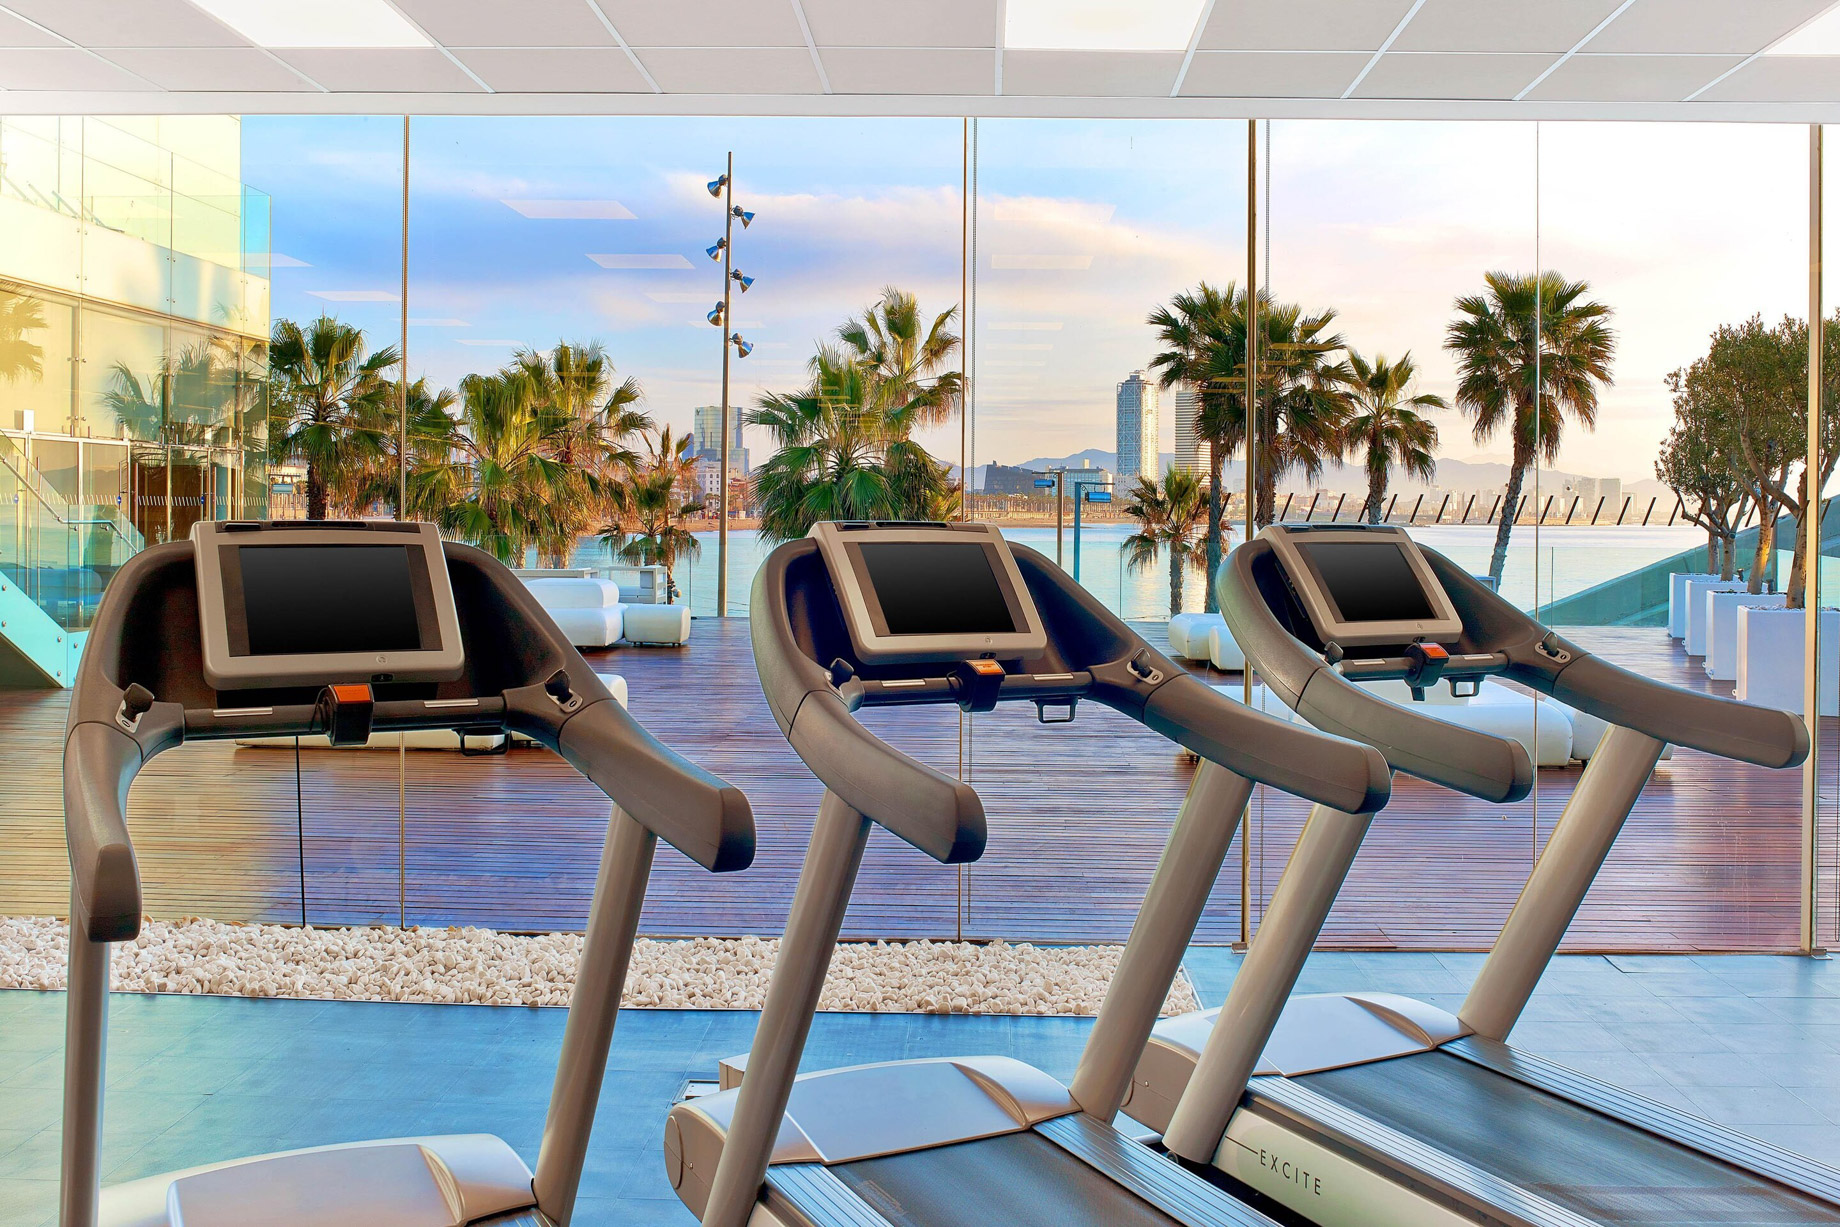 W Barcelona Hotel - Barcelona, Spain - FIT Treadmills